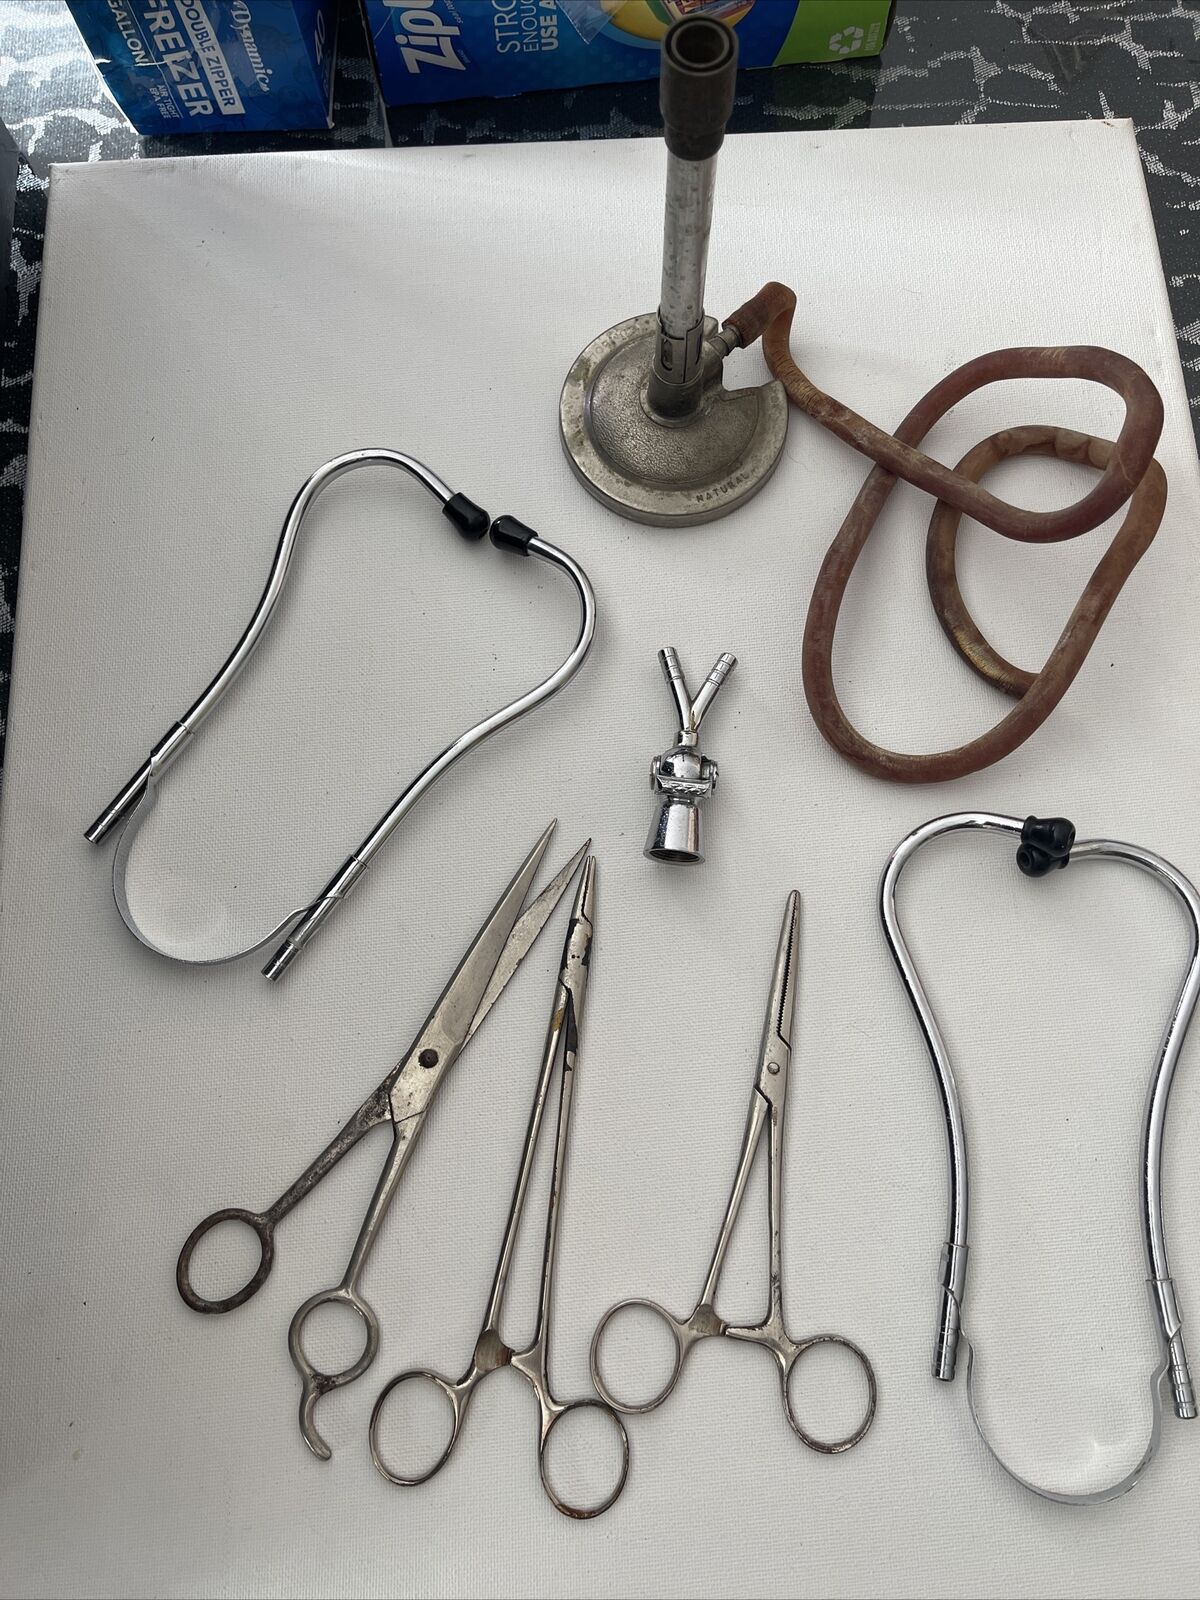 Vintage Medical Tools/Equipment Lot